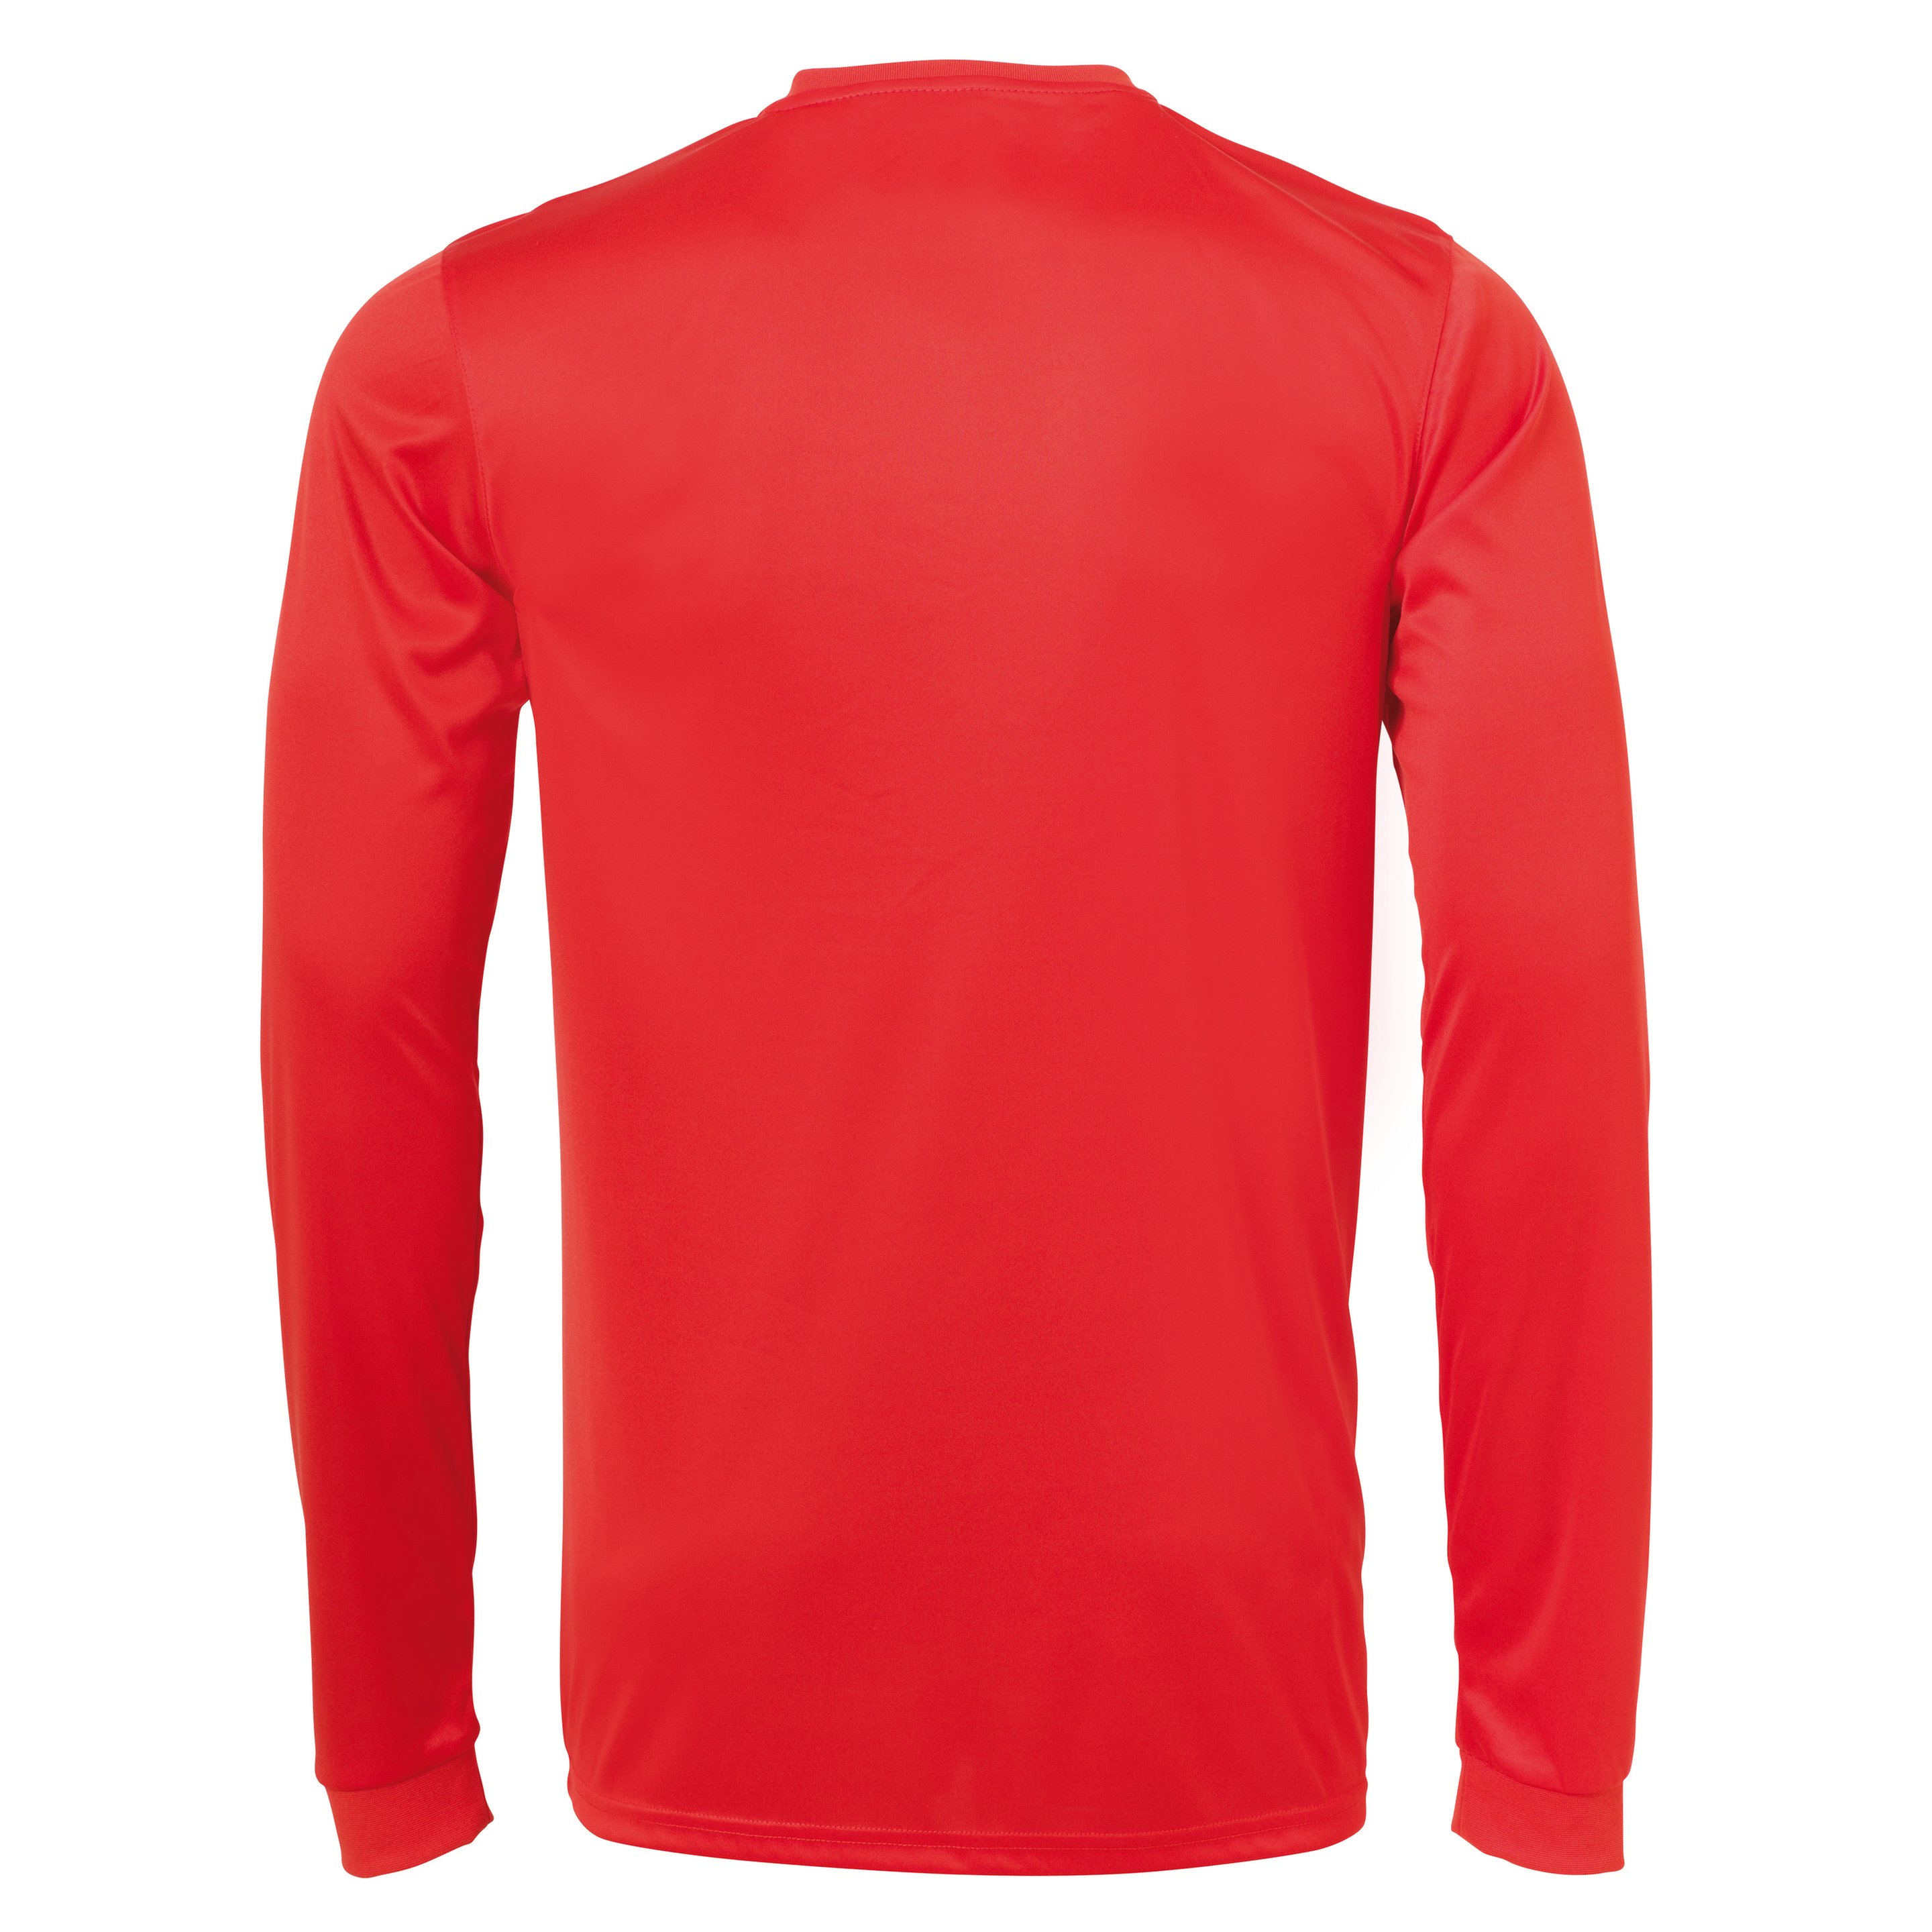 Stream 3.0 Camiseta Ml Rojo/blanco Uhlsport